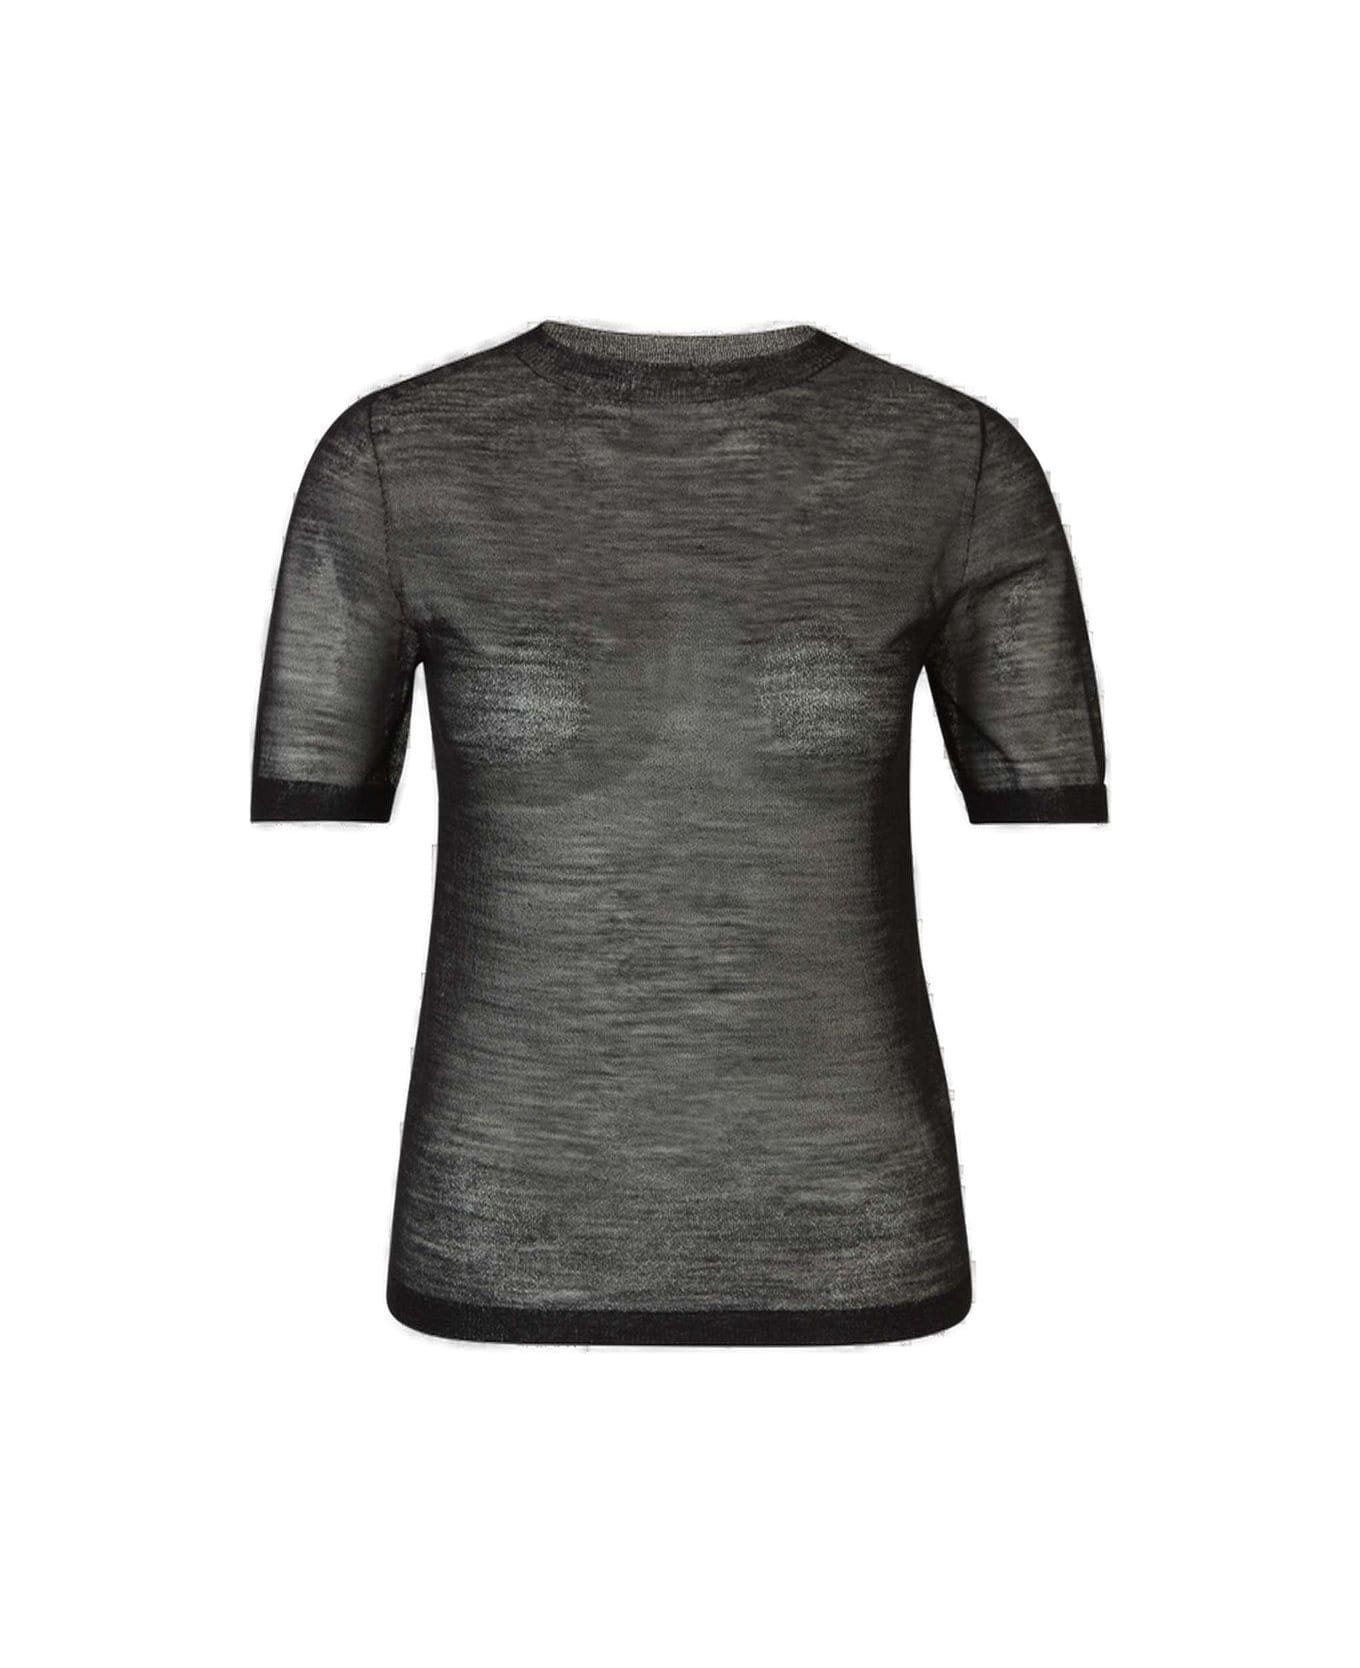 Acne Studios Sheer Knitted T-shirt - BLACK